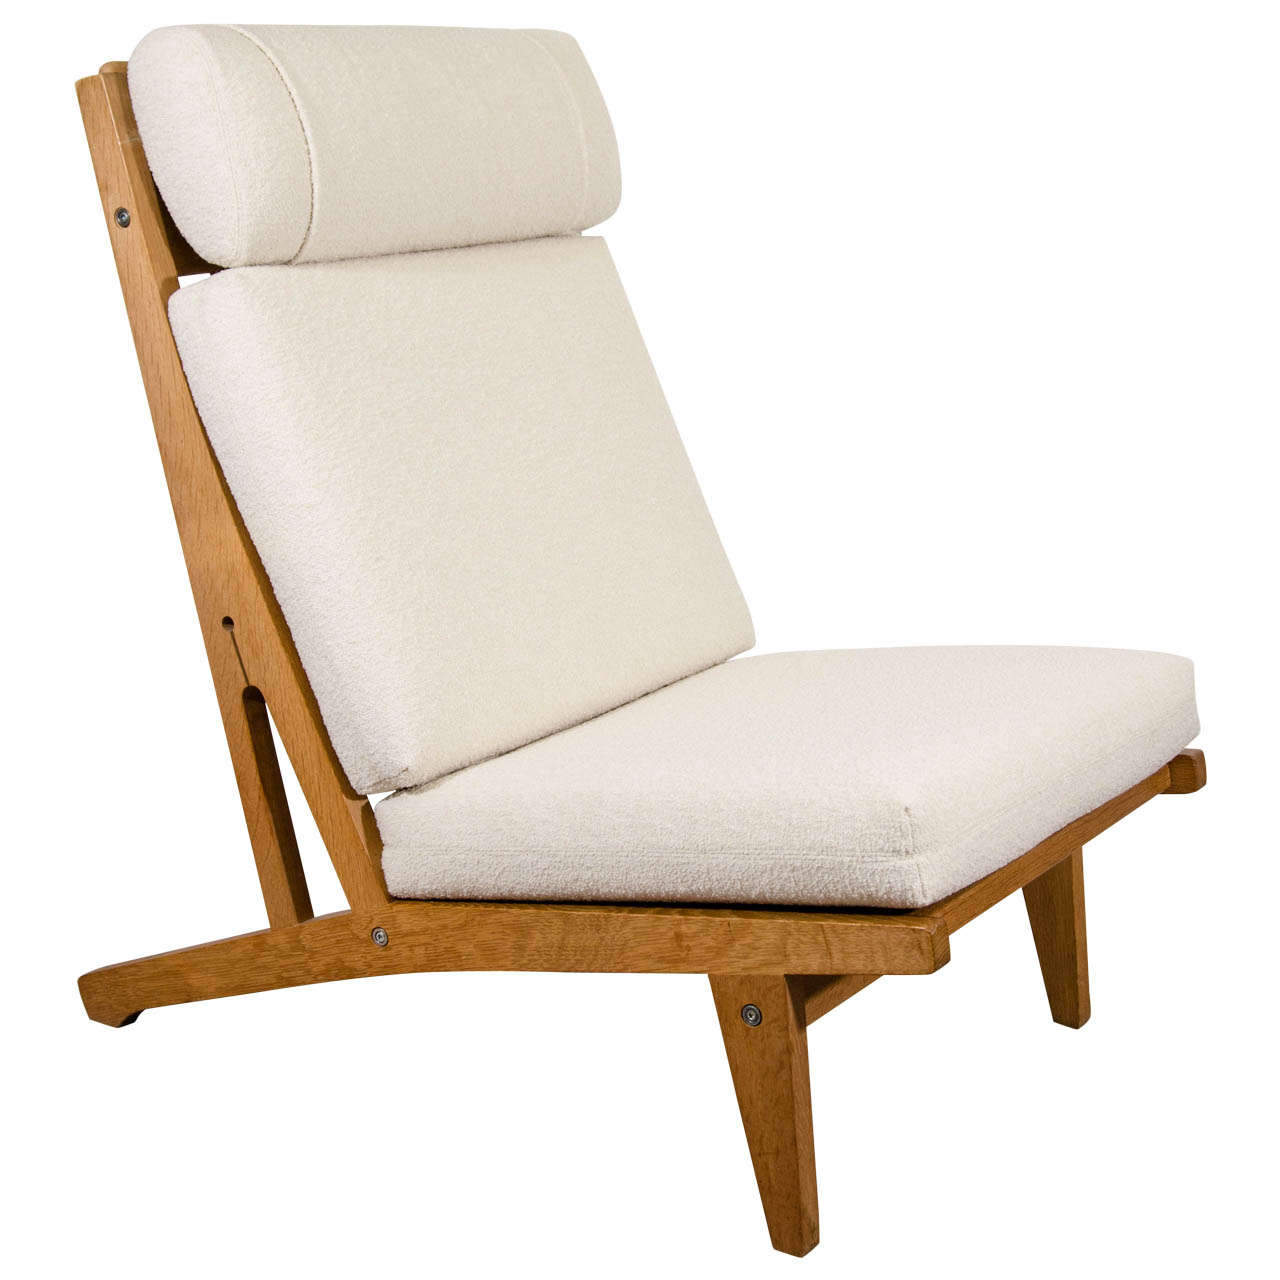 A Mid Century Hans Wegner Lounge Chair By Getama